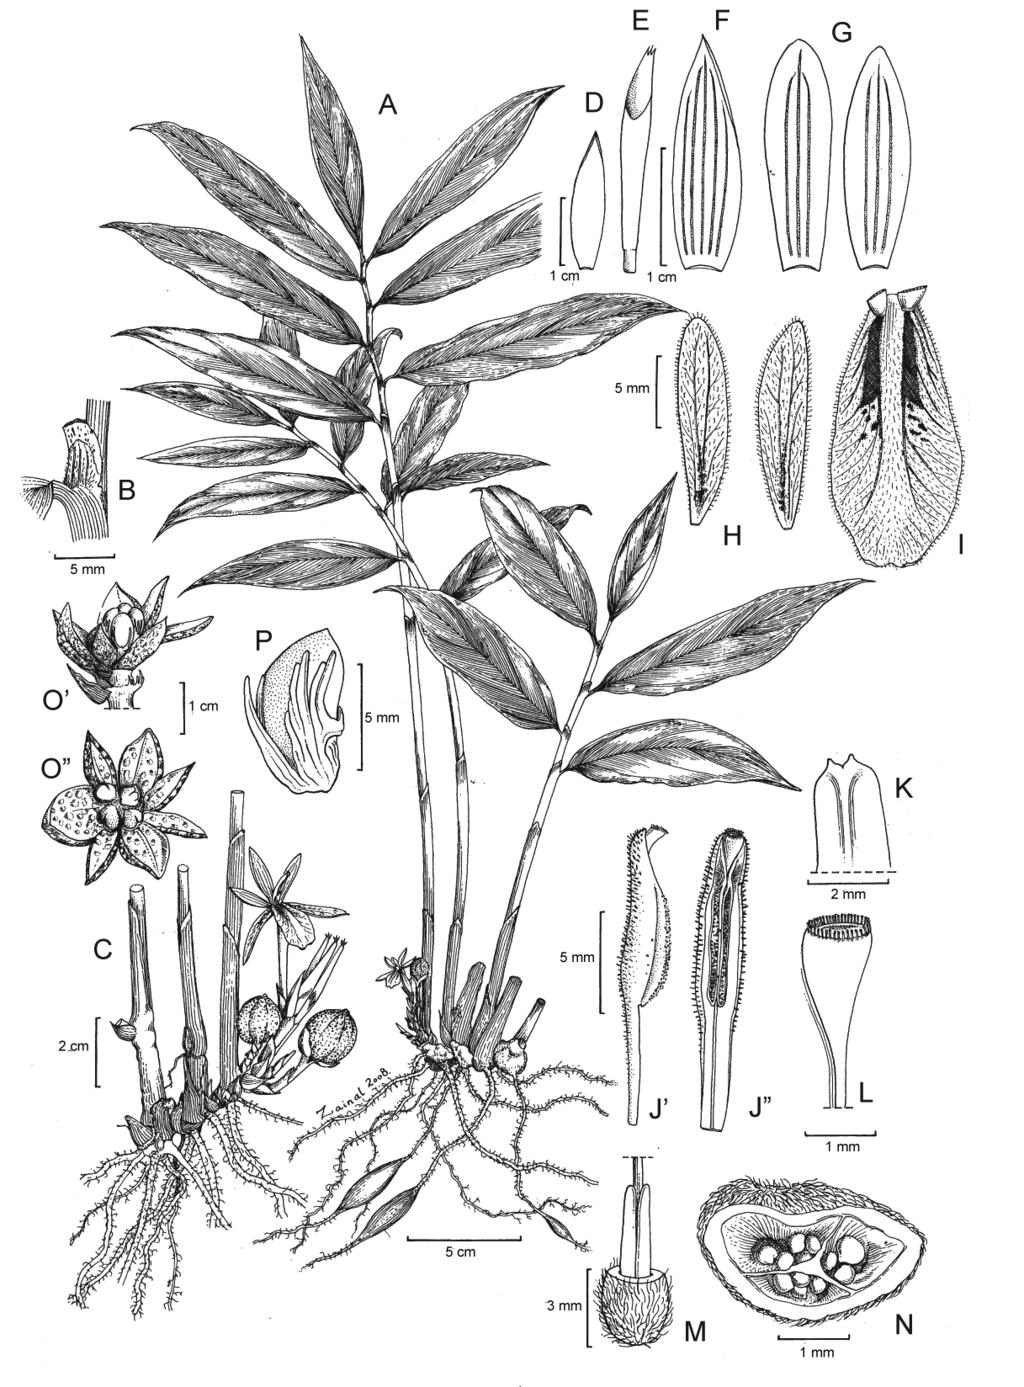 360 Botanical Studies, Vol. 50, 2009 Figure 1. Haniffia flavescens.